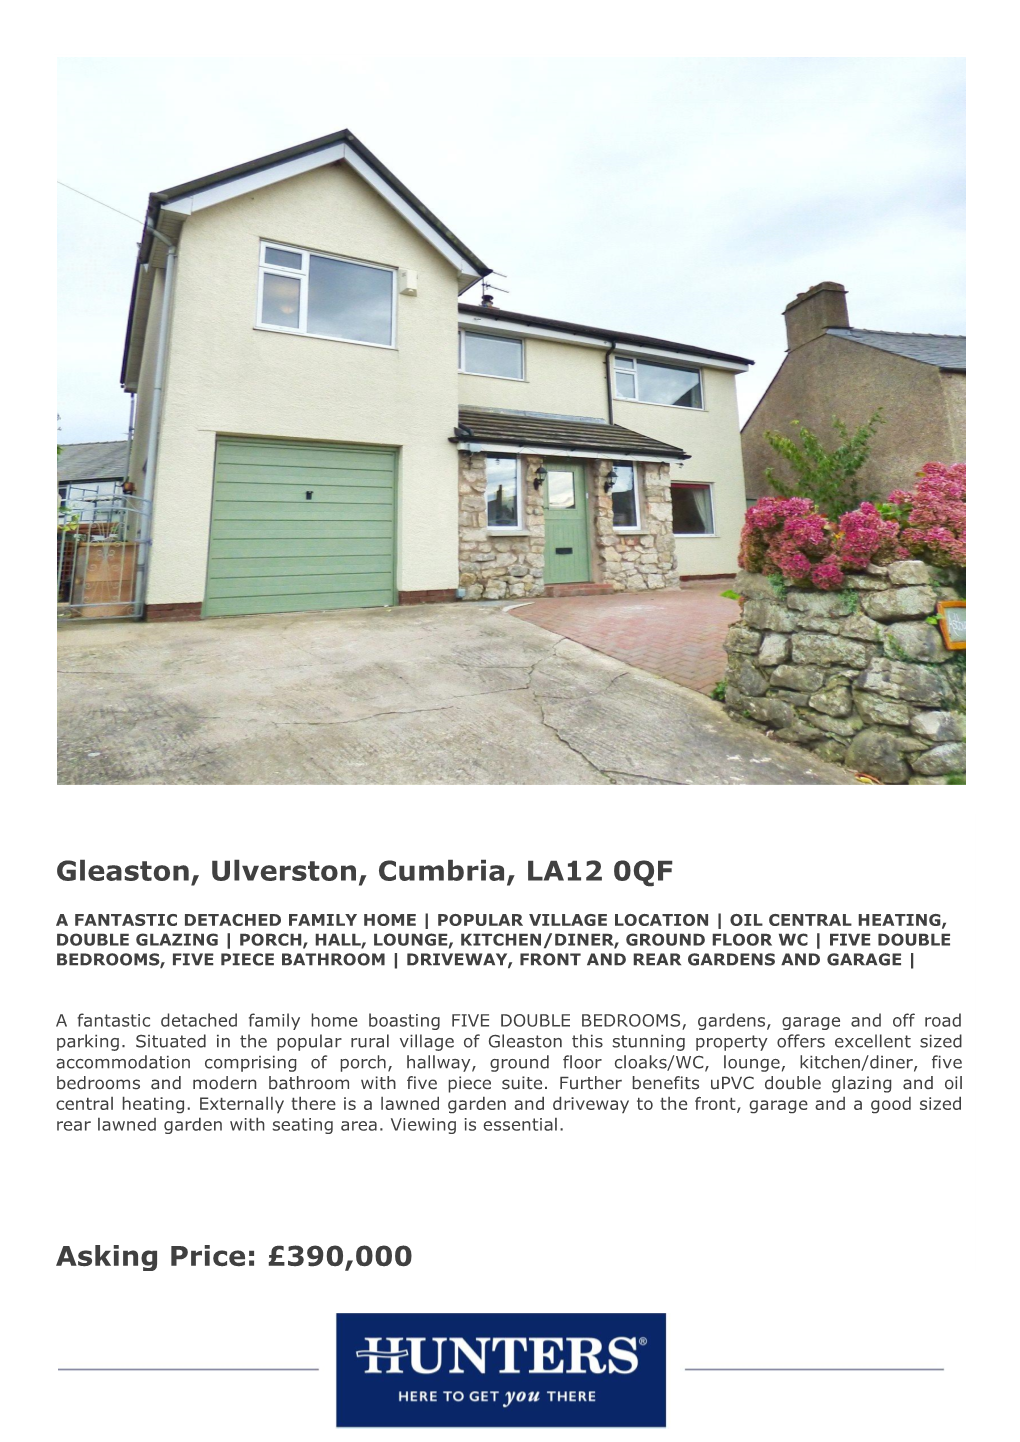 Gleaston, Ulverston, Cumbria, LA12 0QF Asking Price: £390,000